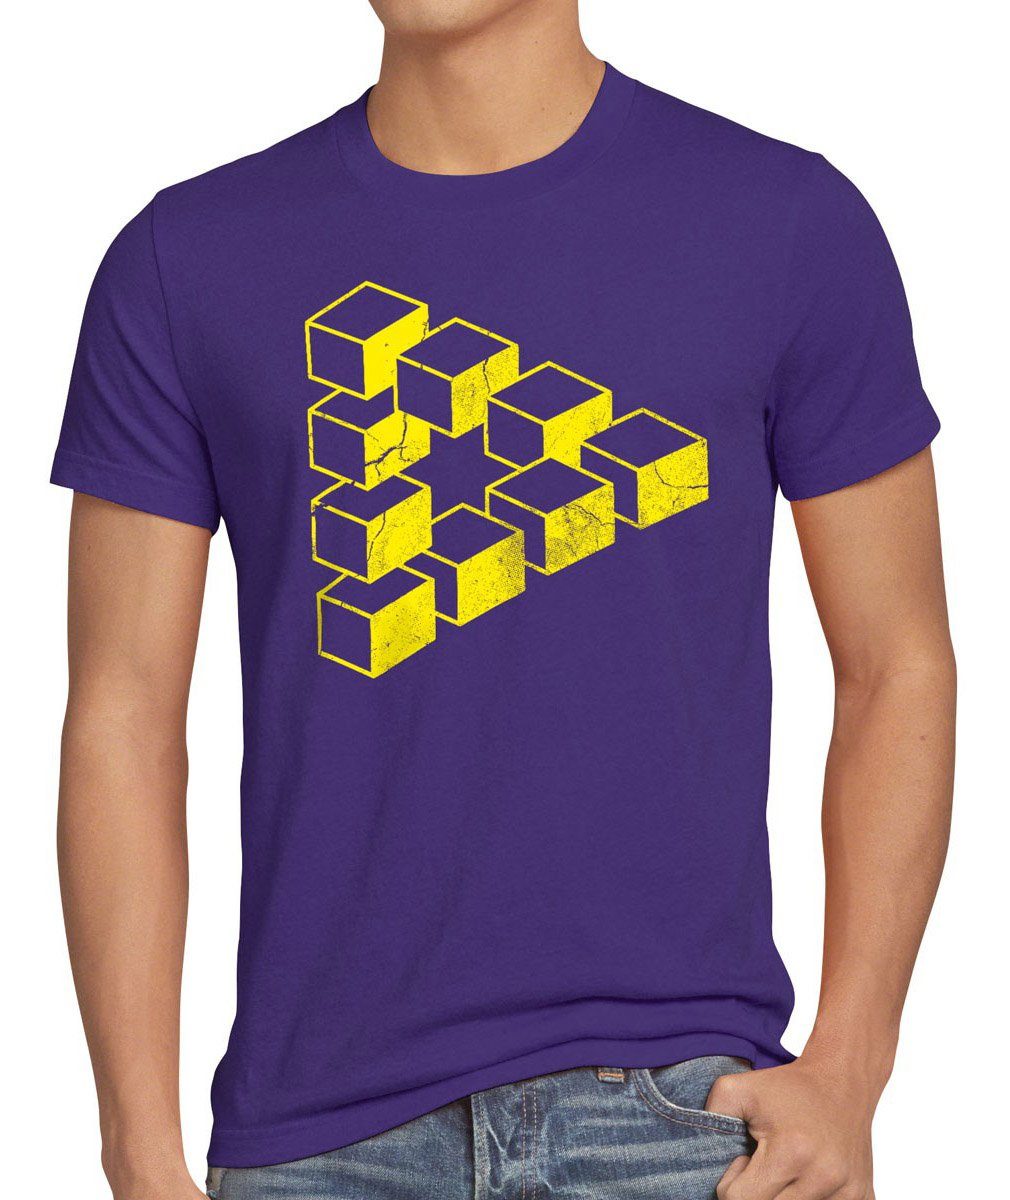 Cube Print-Shirt Theory T-Shirt lila Herren Cooper Escher Penrose Big würfel Dreieck style3 Sheldon bang